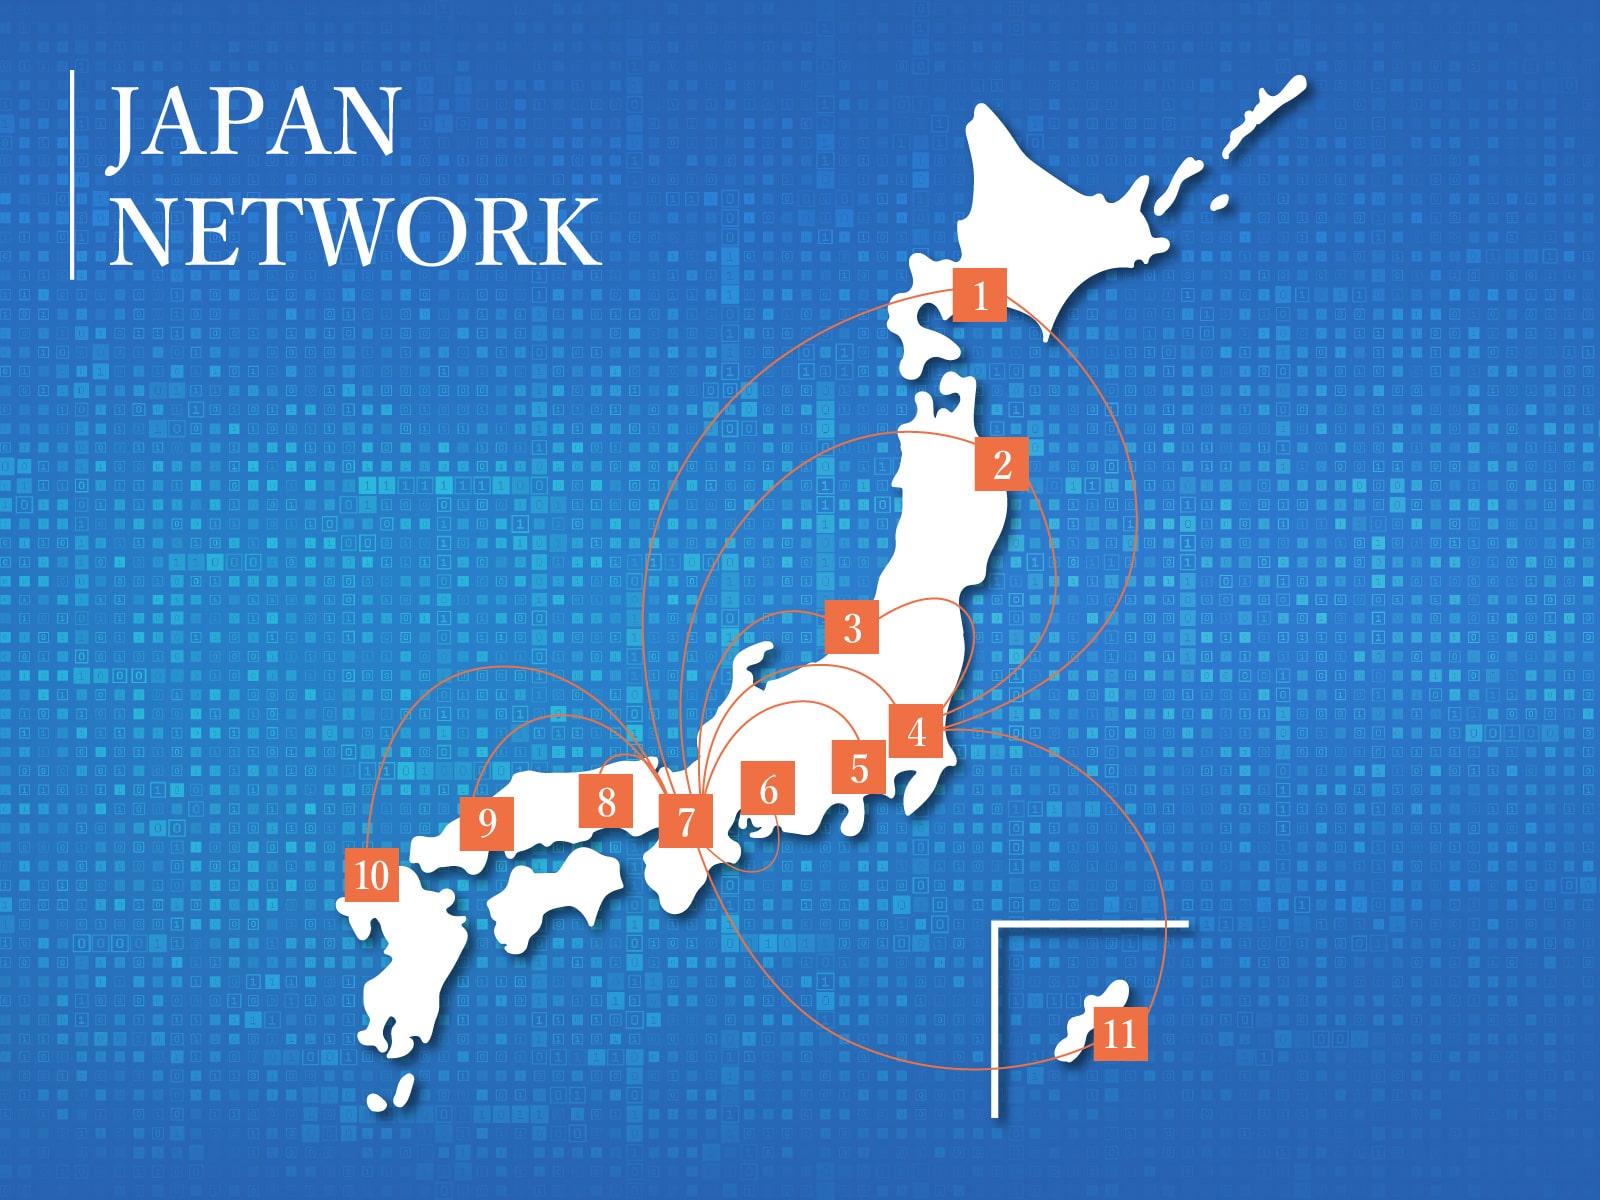 Japan network